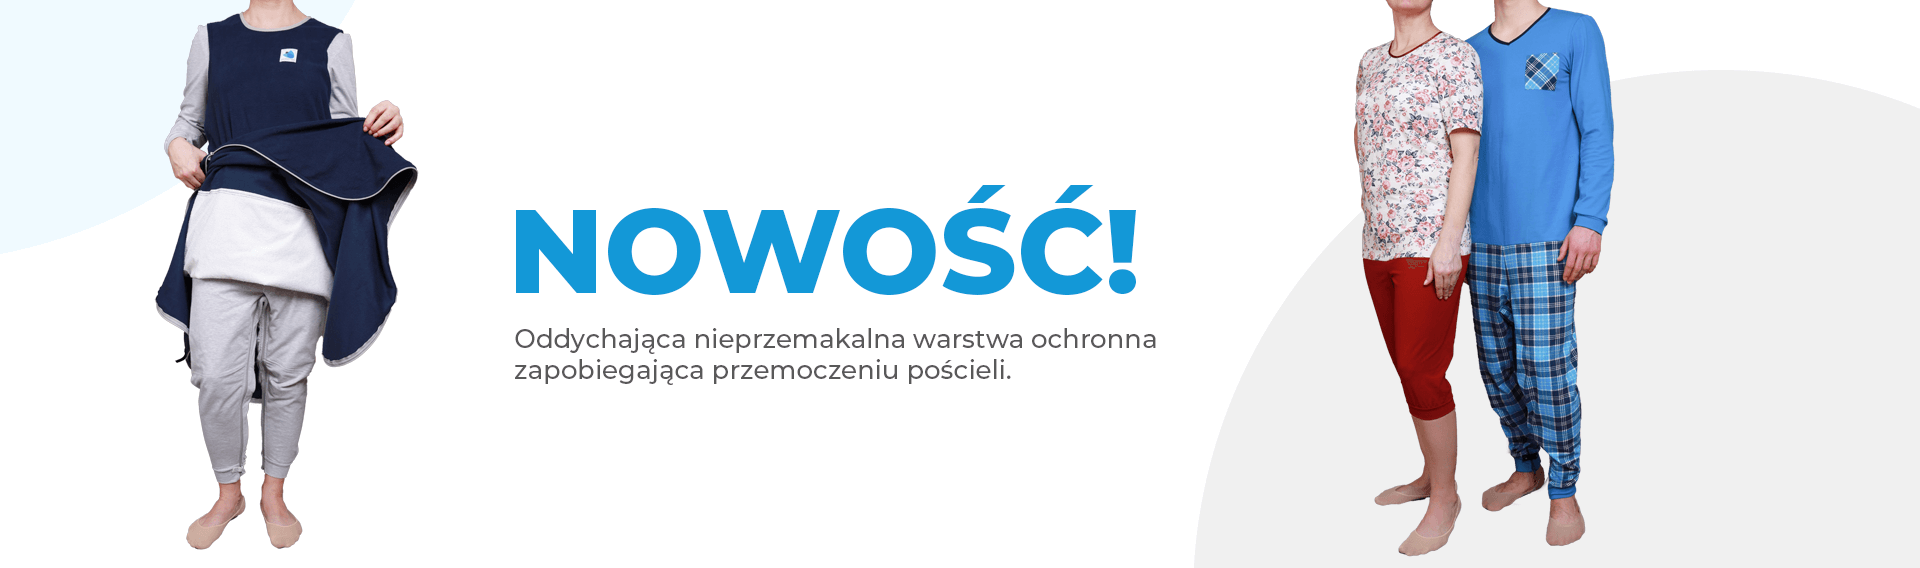 Nowosc 2